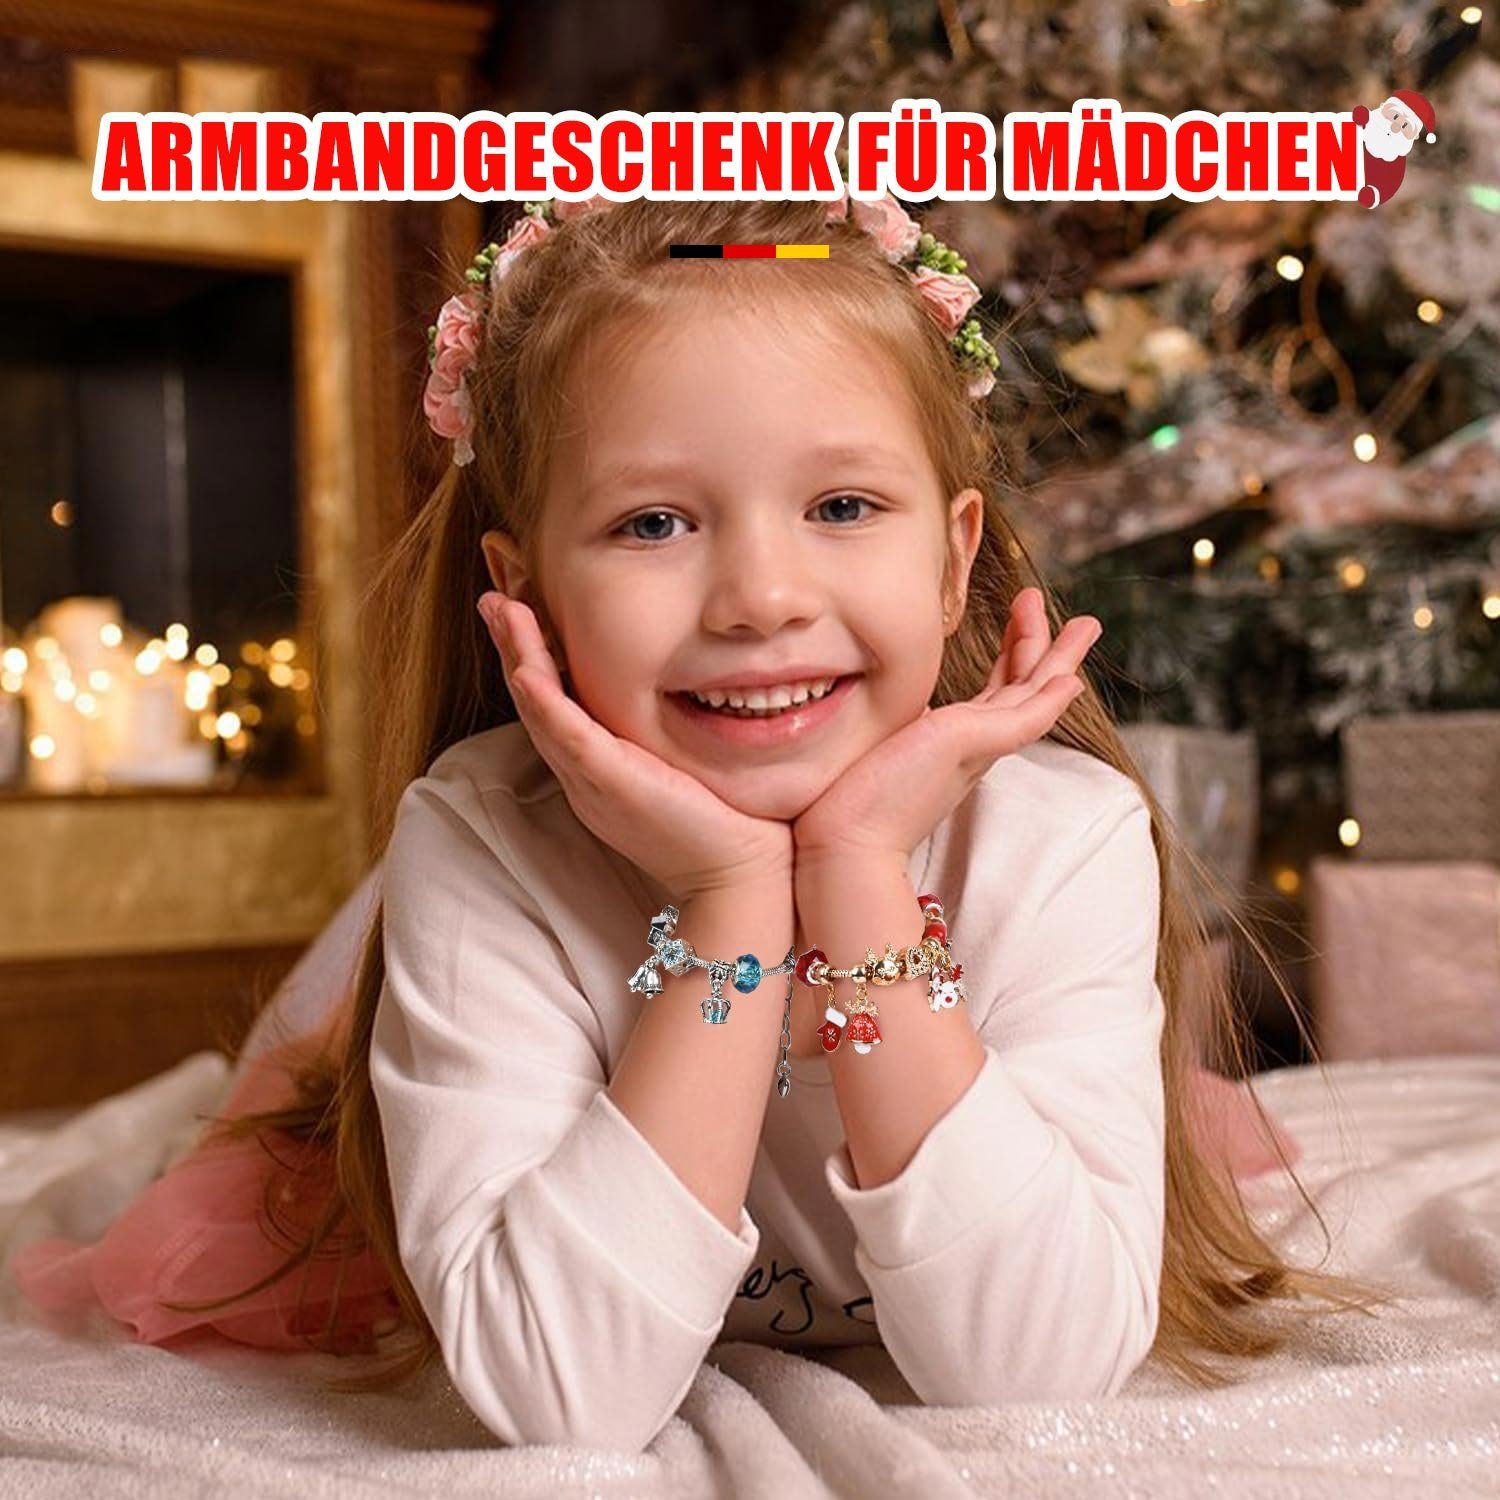 MAGICSHE Adventskalender Anhänger 24 DIY Blau1 Füllprozess Weihnachtskalender Sets, Armband Armband